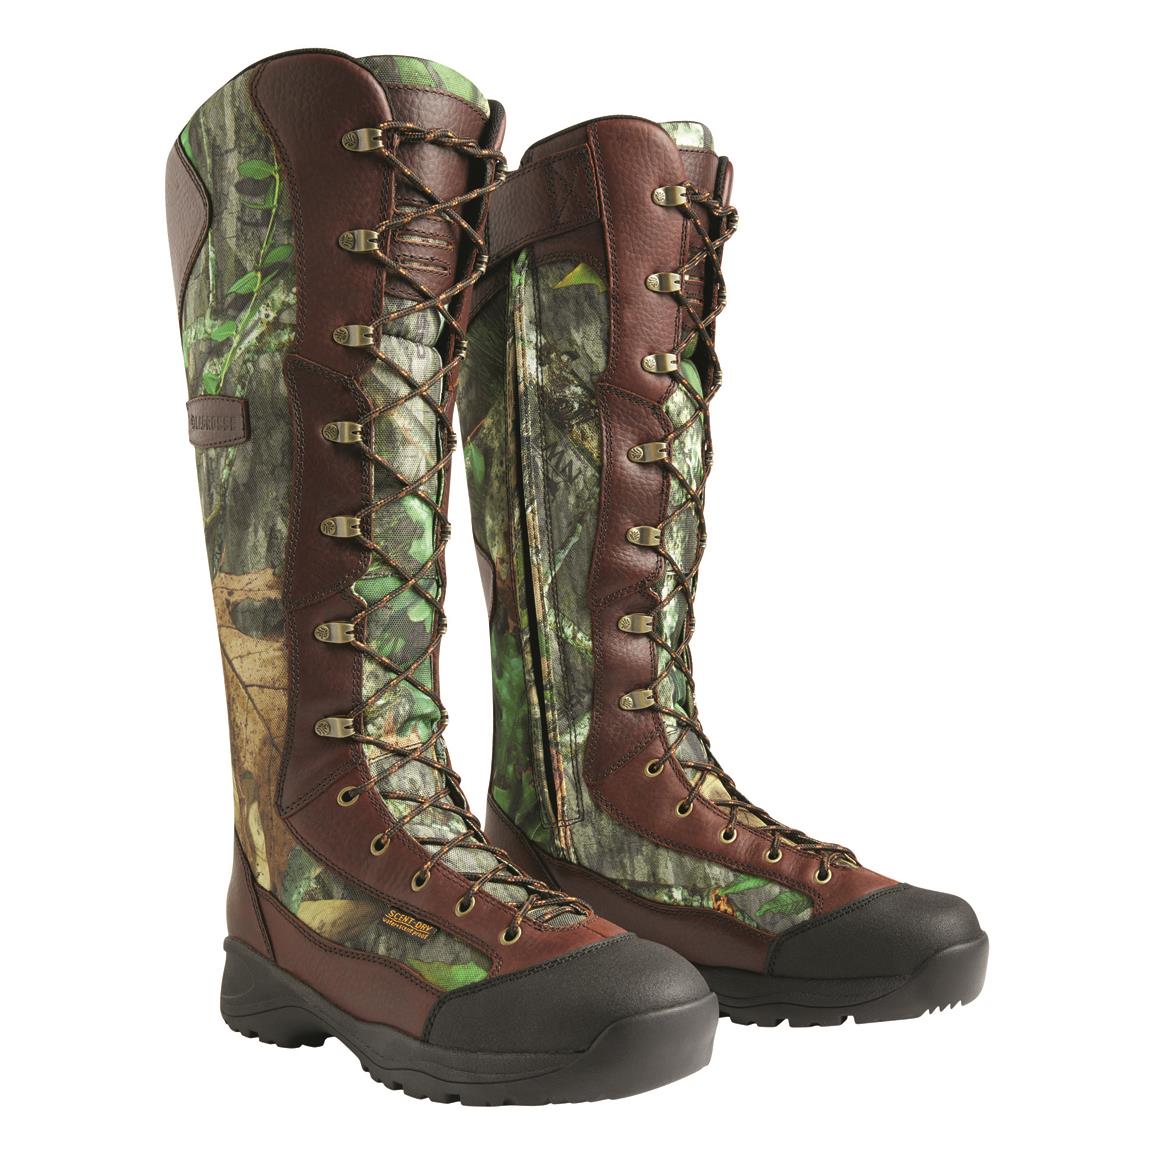 bottomland snake boots